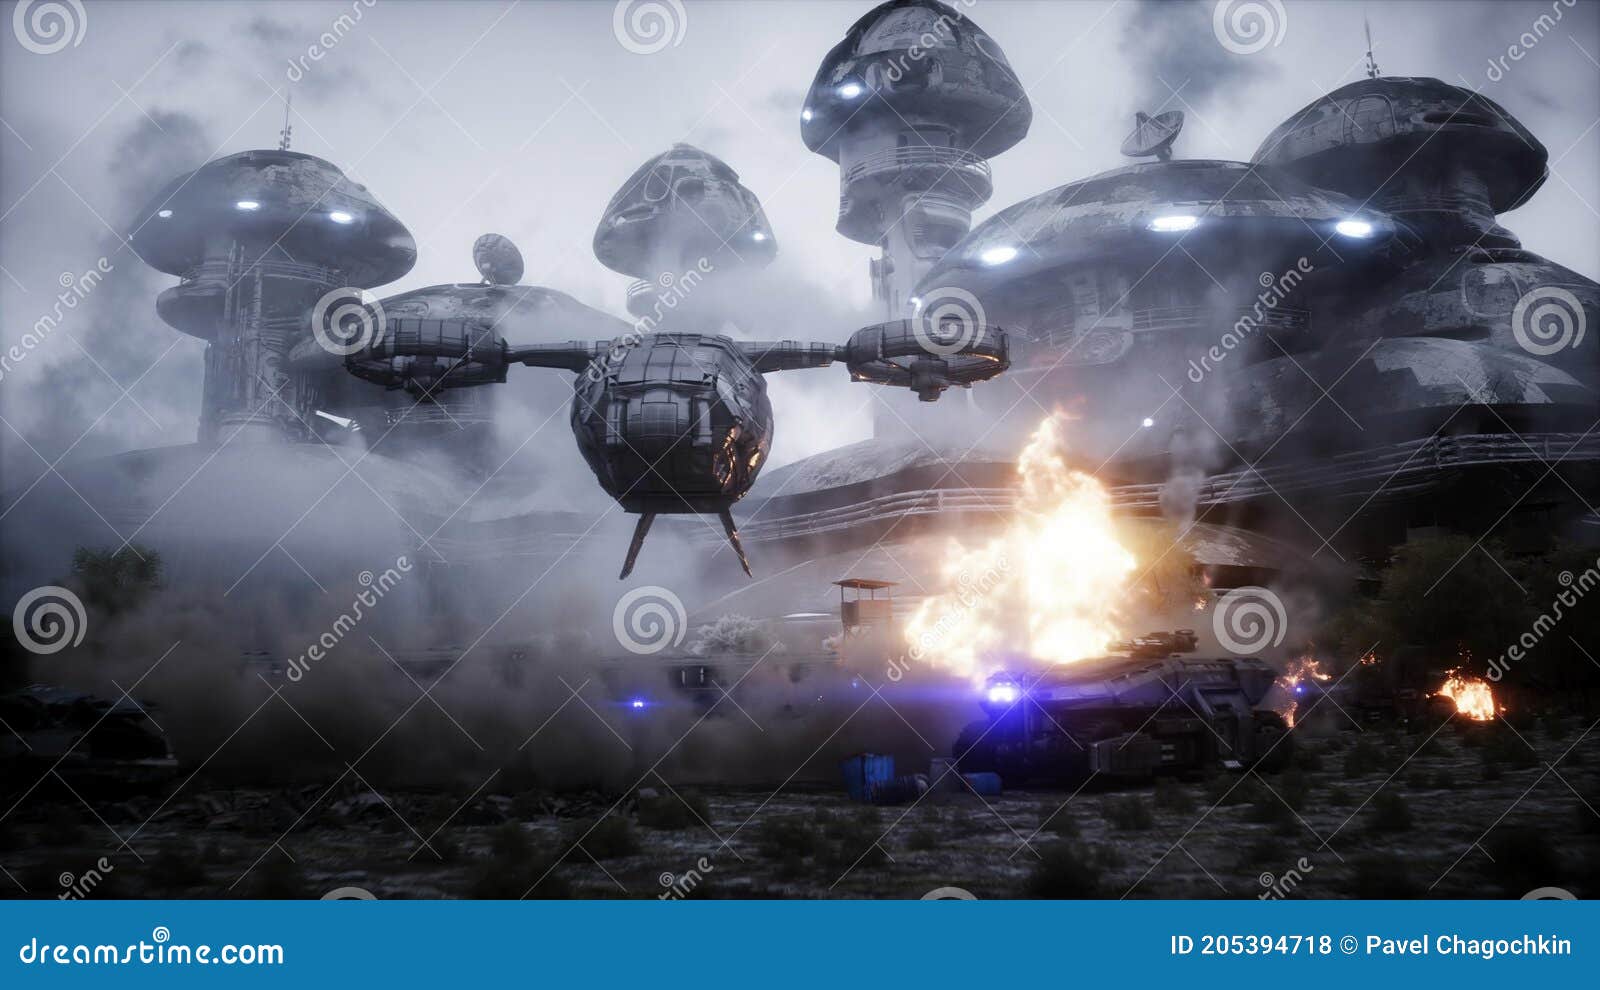 Futuristic Sci Fi Ship Take Wing. Military Robot. Apocalypse City. 3d  Rendering. Stock Illustration - Illustration of blue, fiction: 205394718